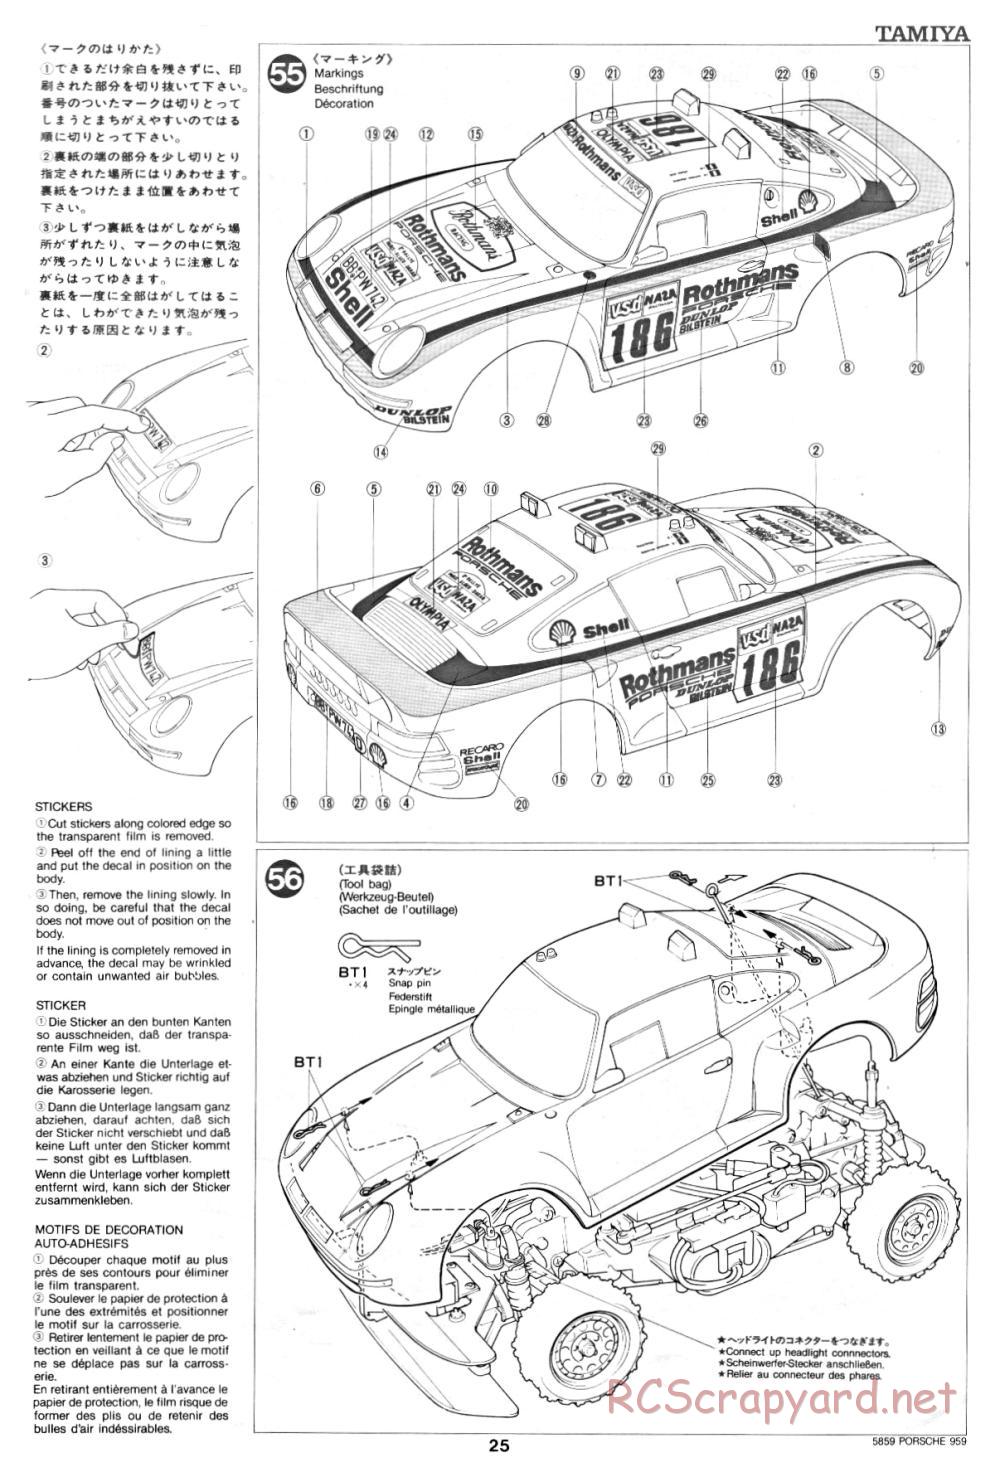 Tamiya - Porsche 959 - 58059 - Manual - Page 25